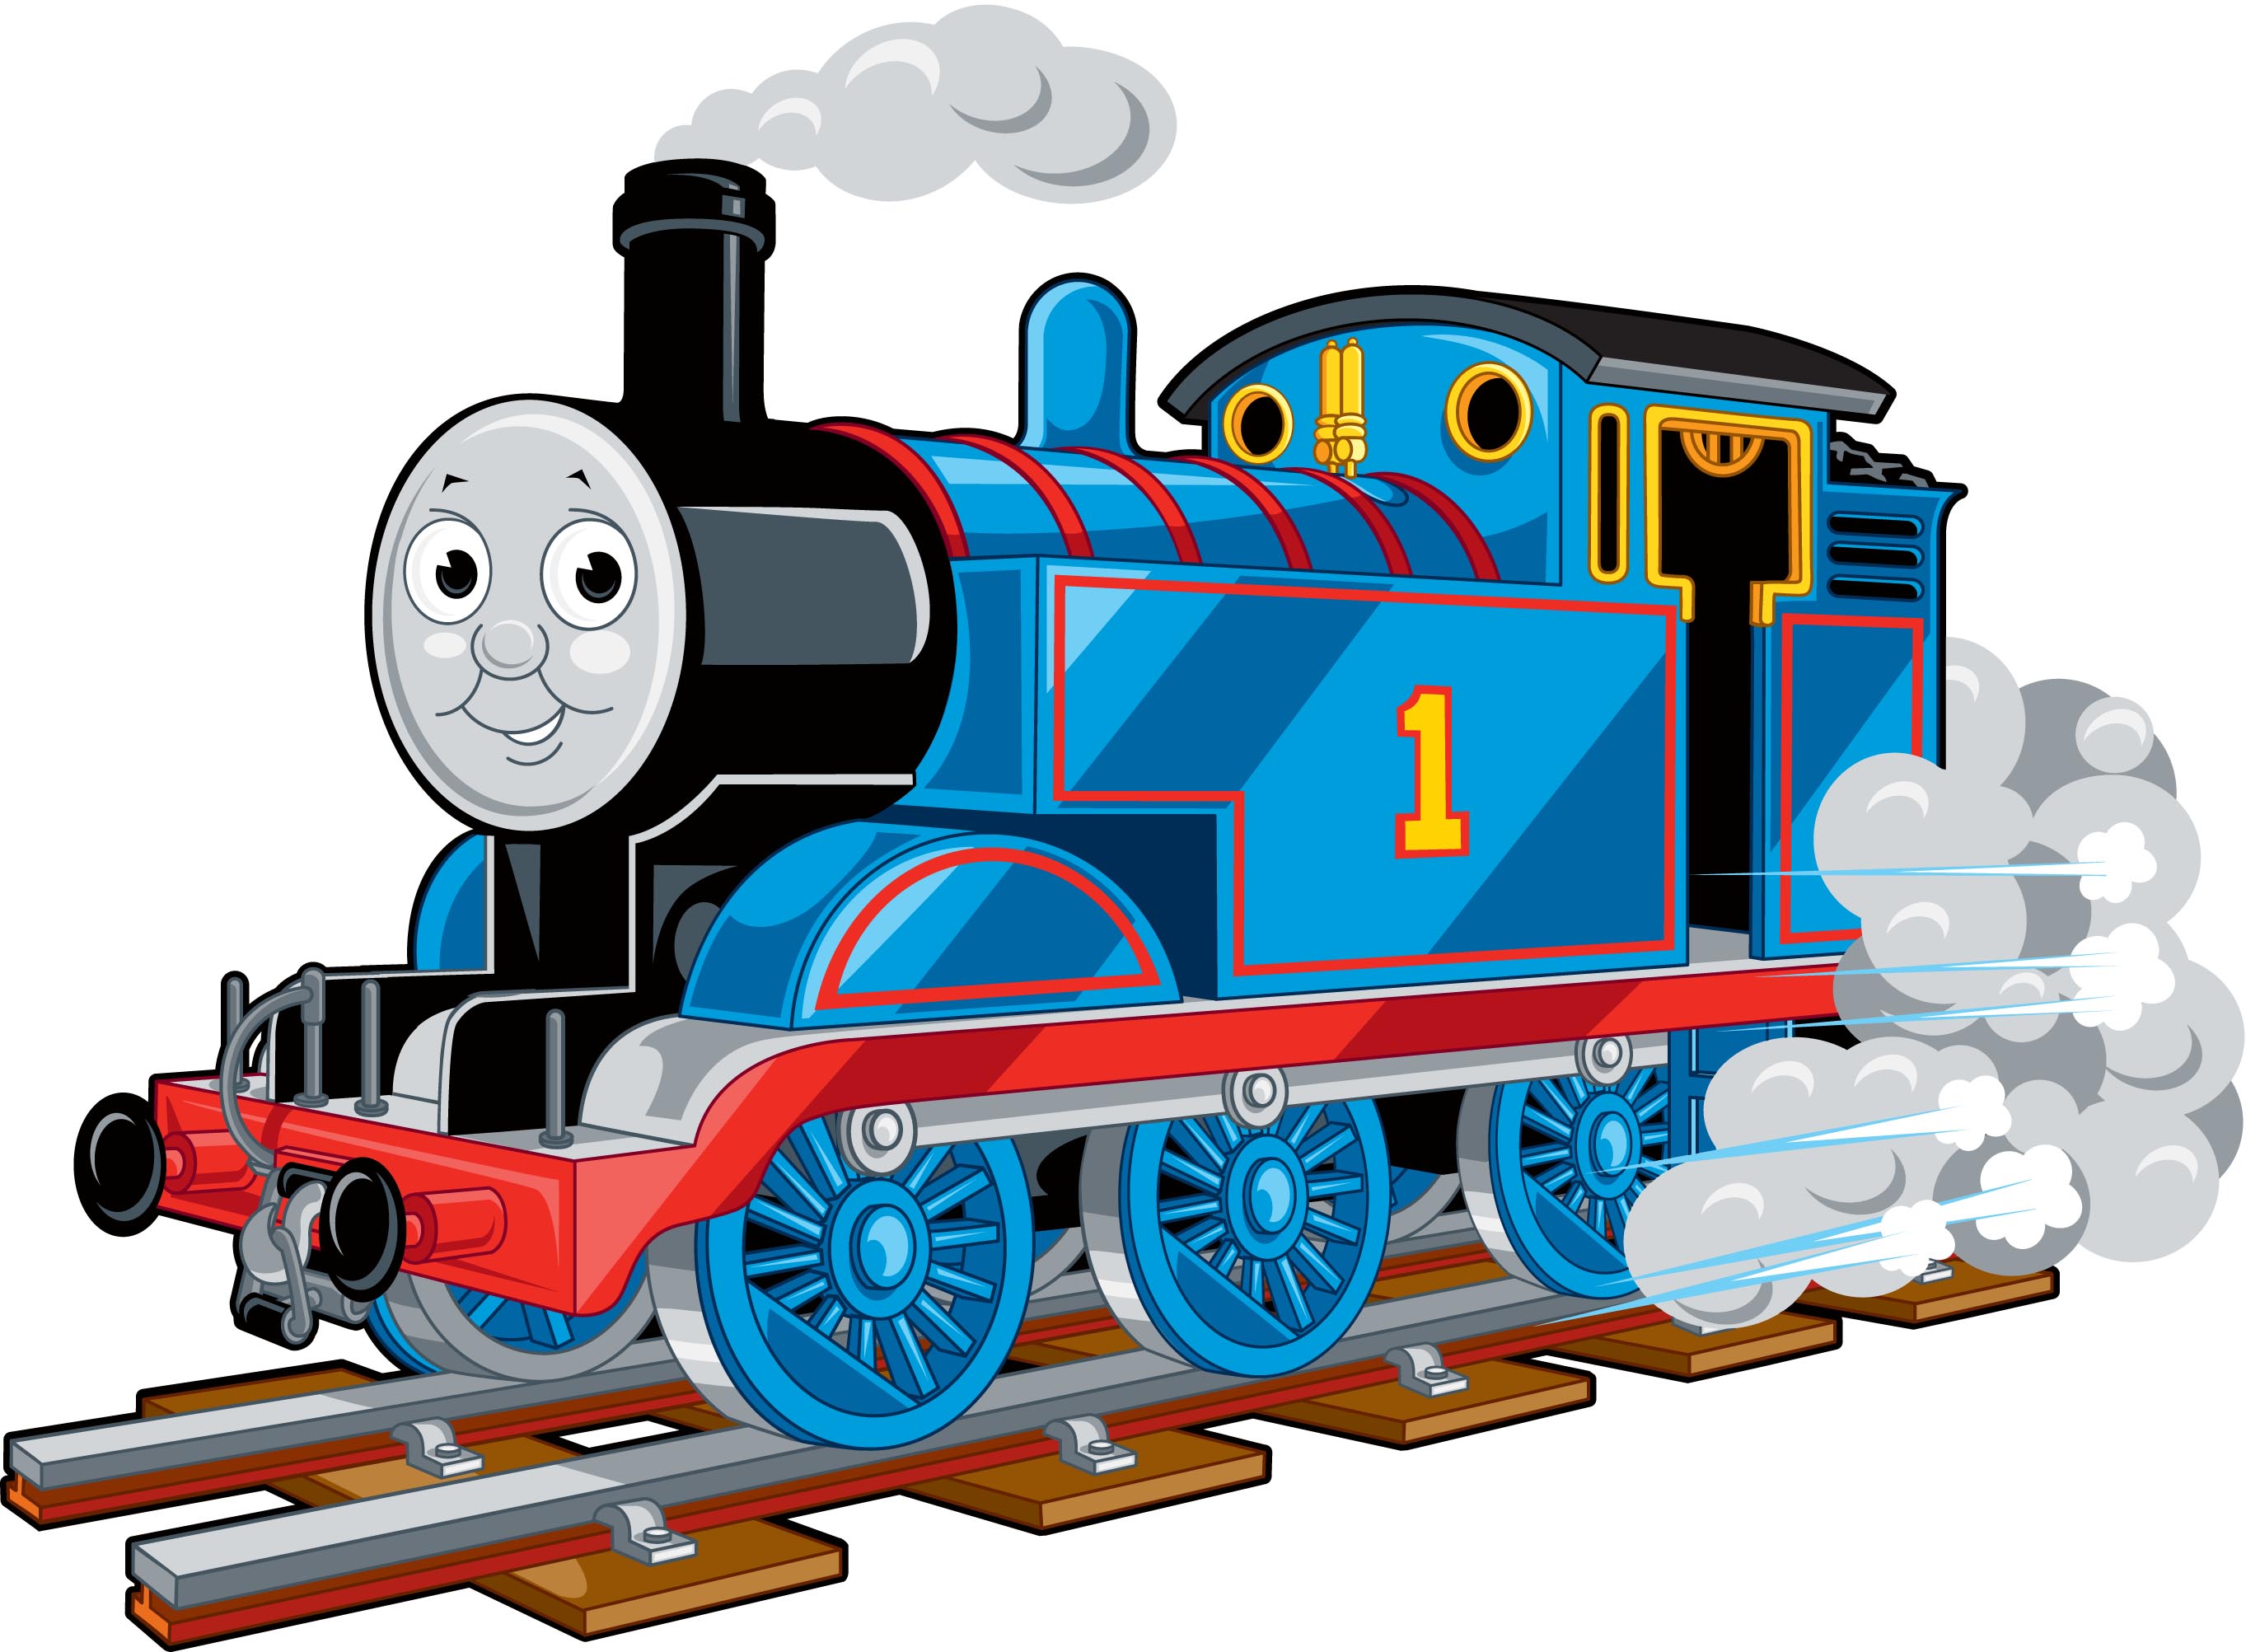 Thomas the train clipart